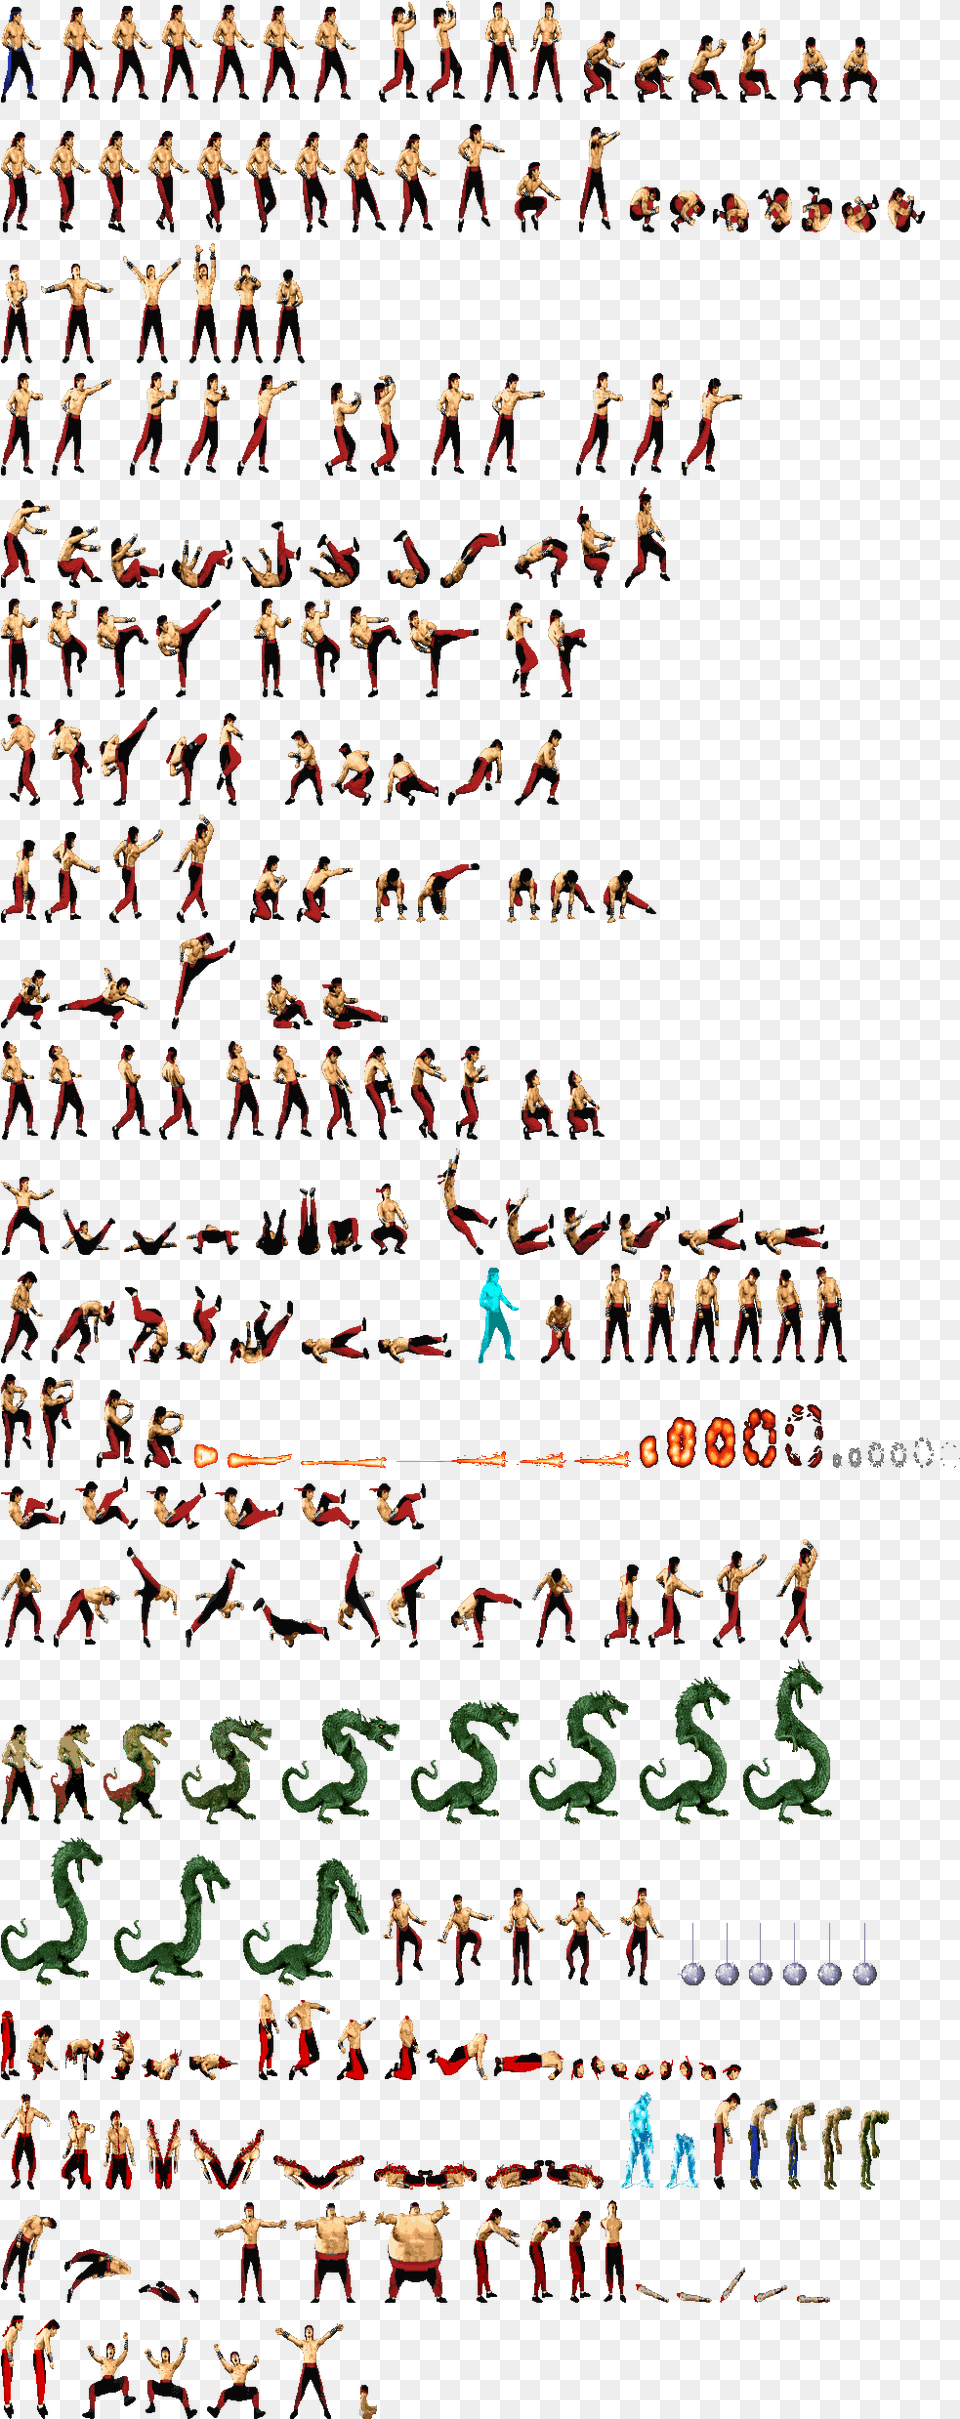 Liu Kang By Handtoeknee Mortal Kombat Sprite Sheets, Person, Text, People Free Png Download